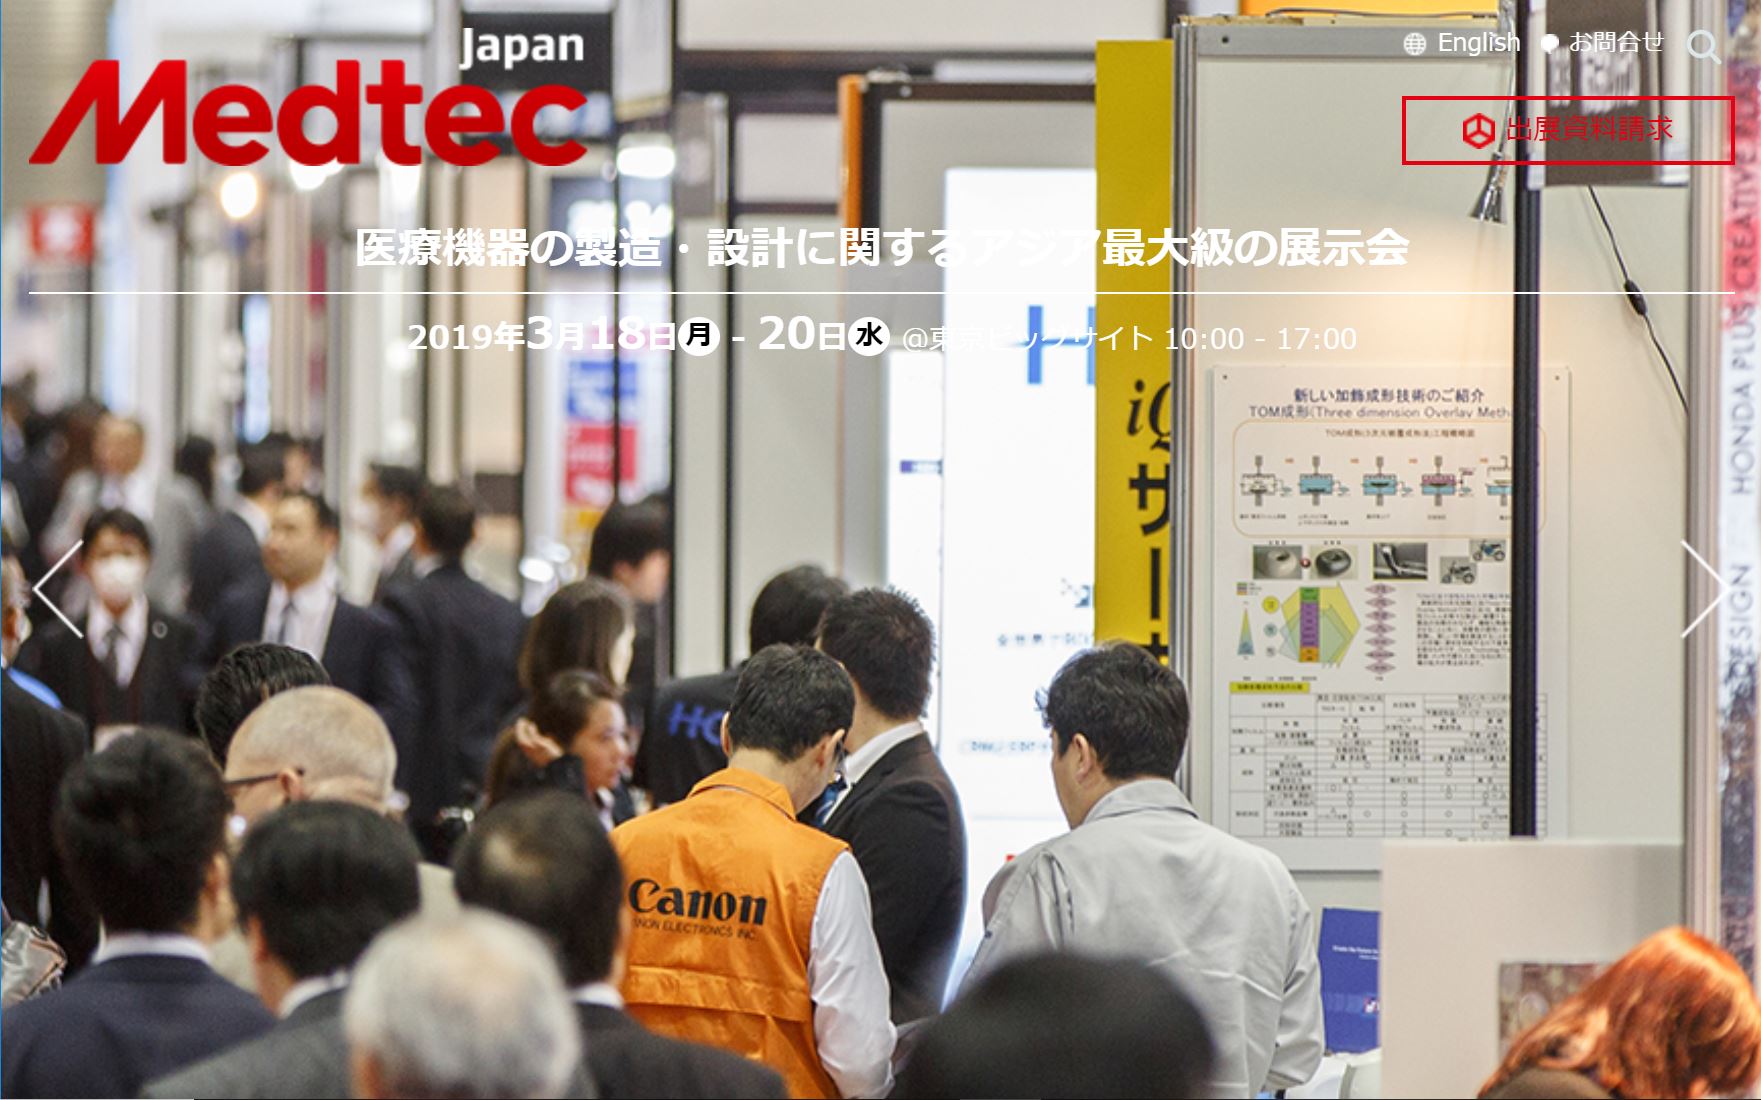 「Medtec Japan 2019」に JIBA として出展のイメージ